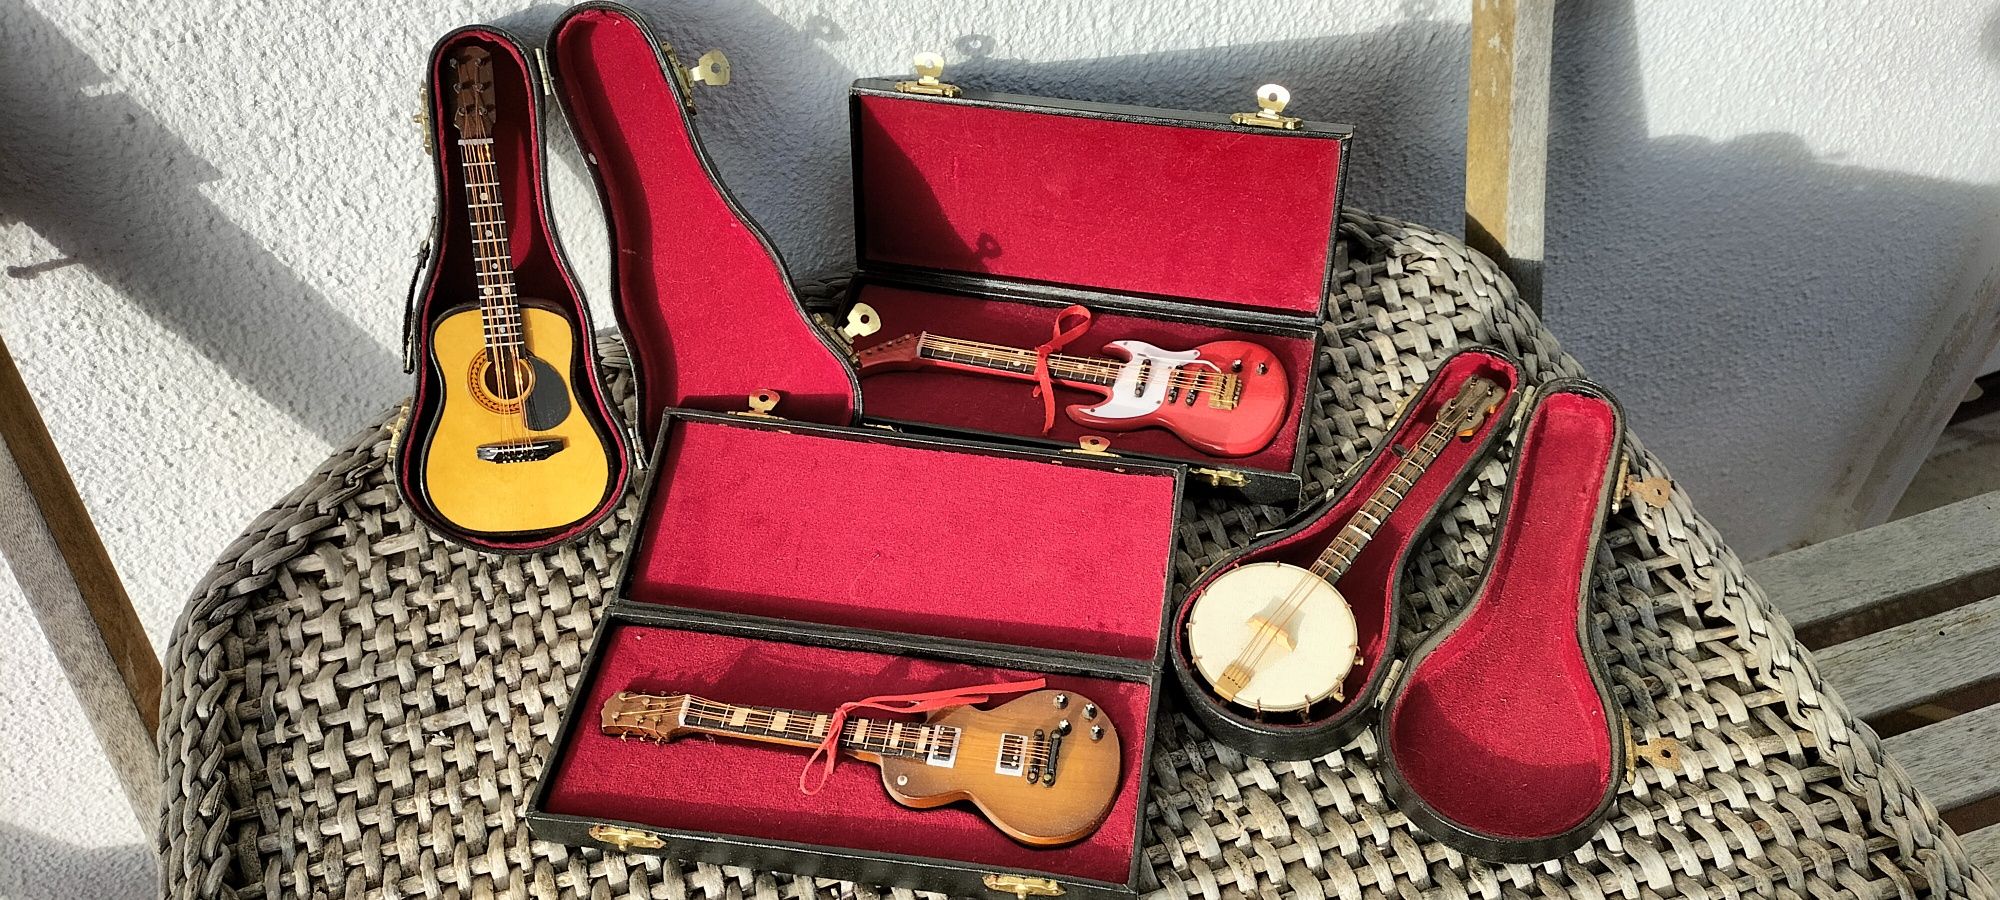 Guitarras miniatura